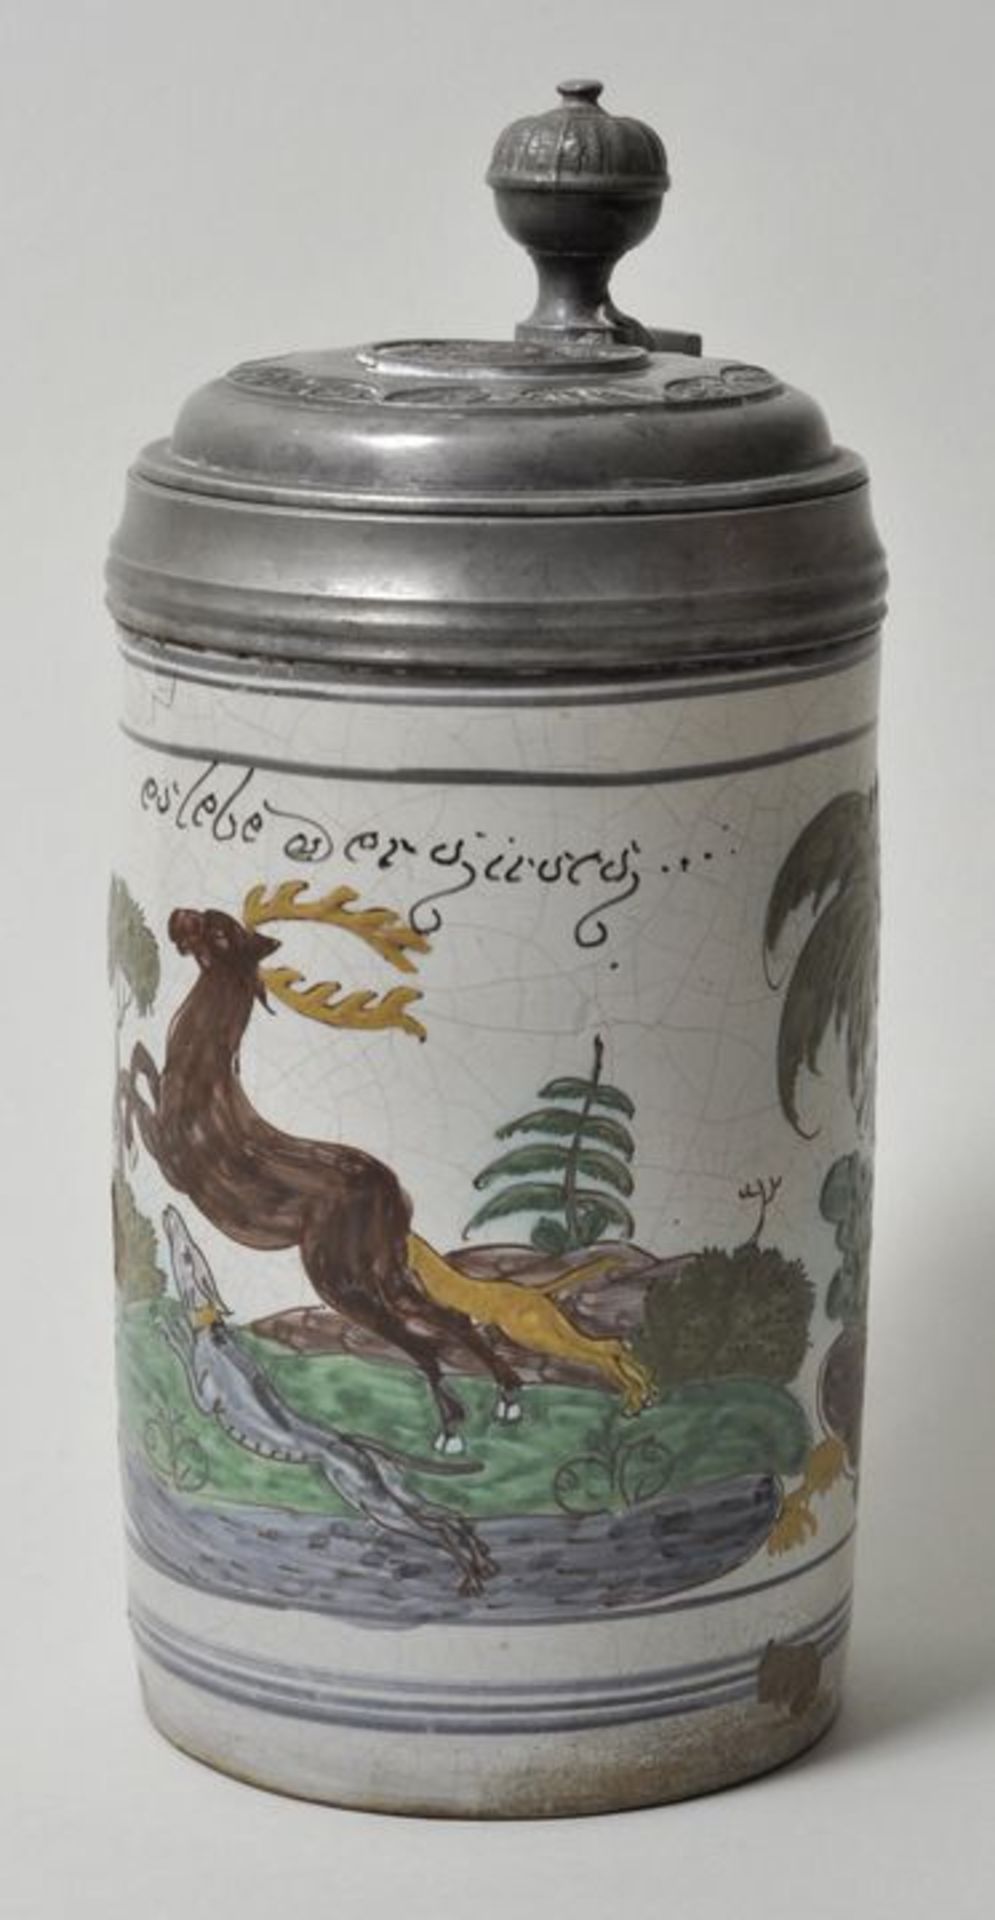 Walzenkrug, wohl Thüringen, 18. Jh. (?)Fayence, polychrome Muffelfarbenmalerei mit braunen